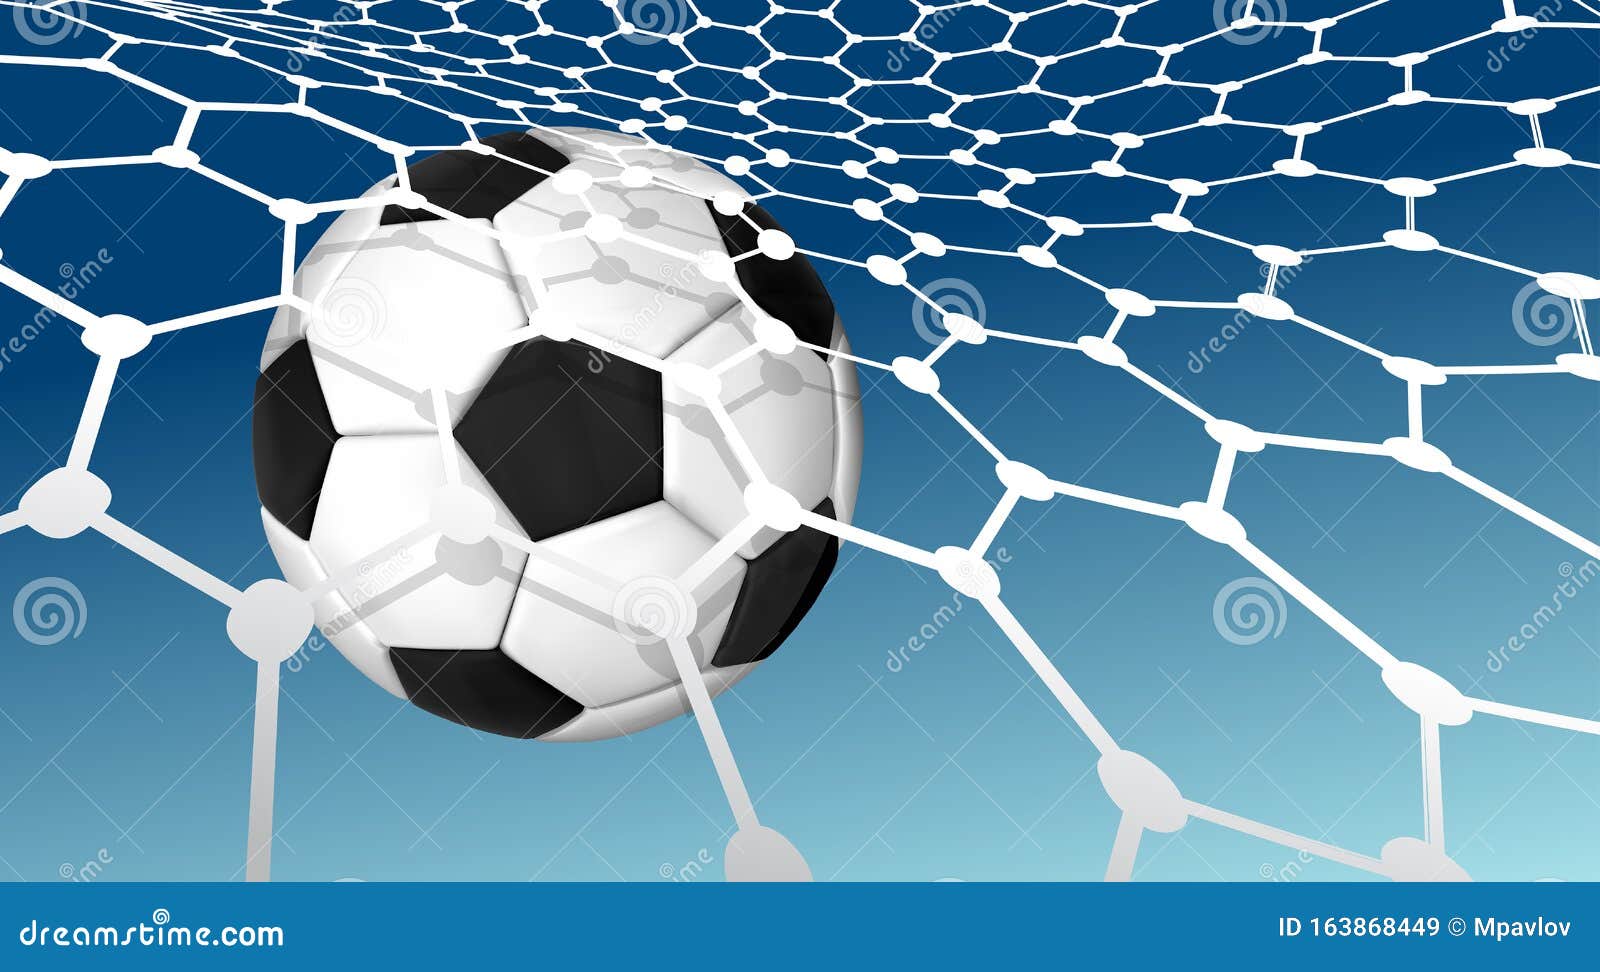 Soccer Ball Flying Into The Net Of A Soccer Goal Net Goal Vector Illustration On Blue Sky Background Stock Vector Illustration Of Kickoff Shoot